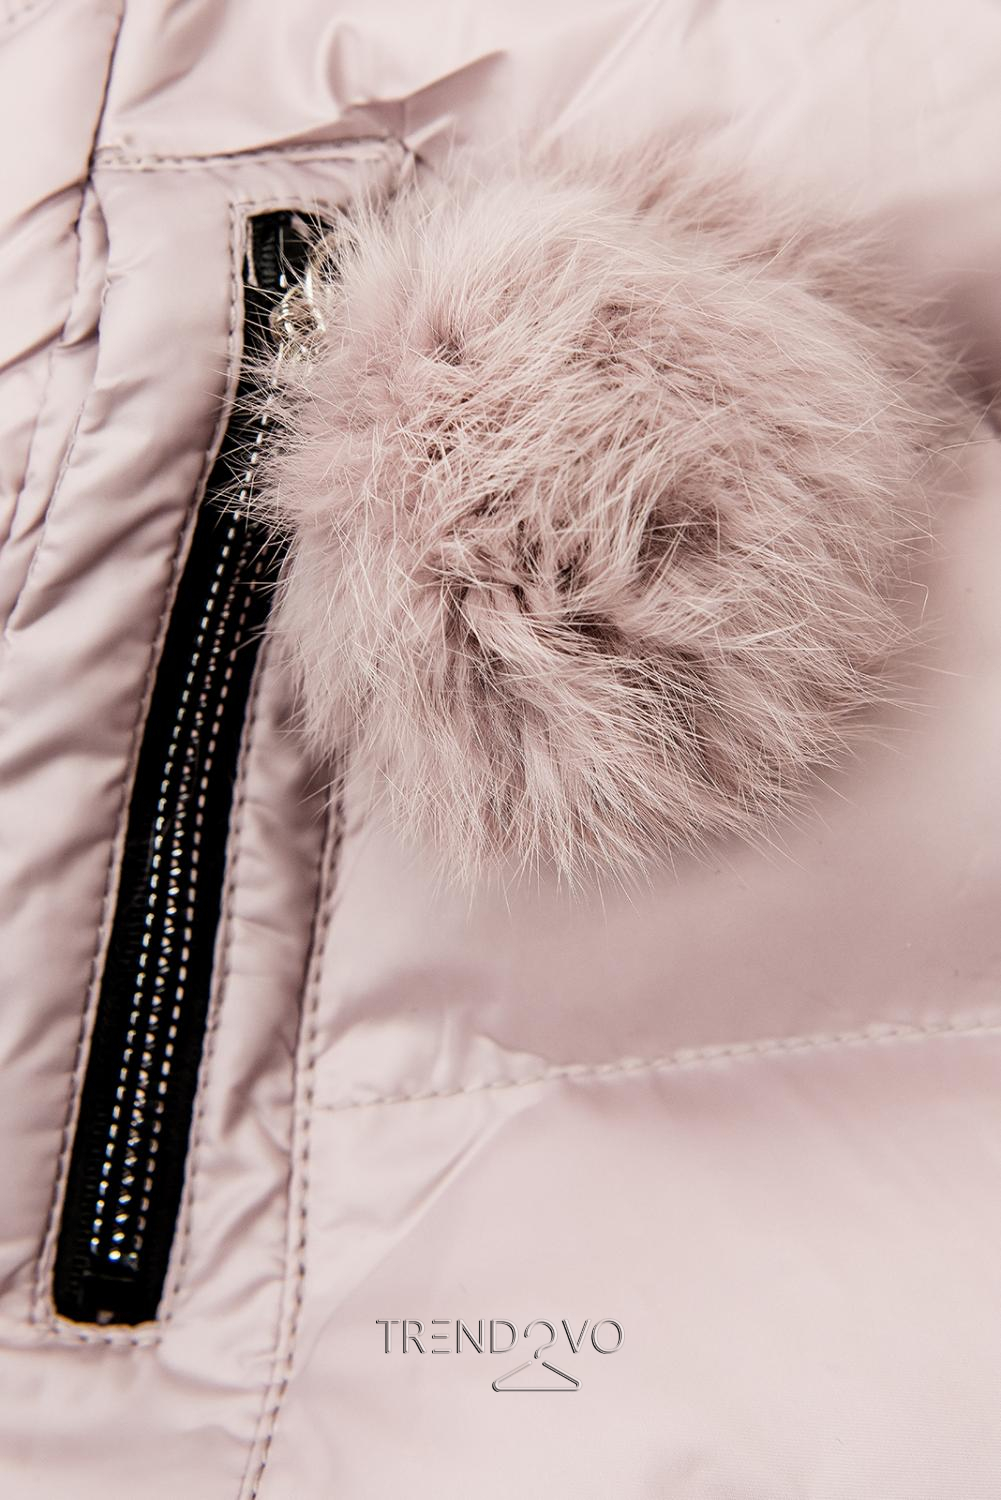 Ružová zimná bunda/vesta